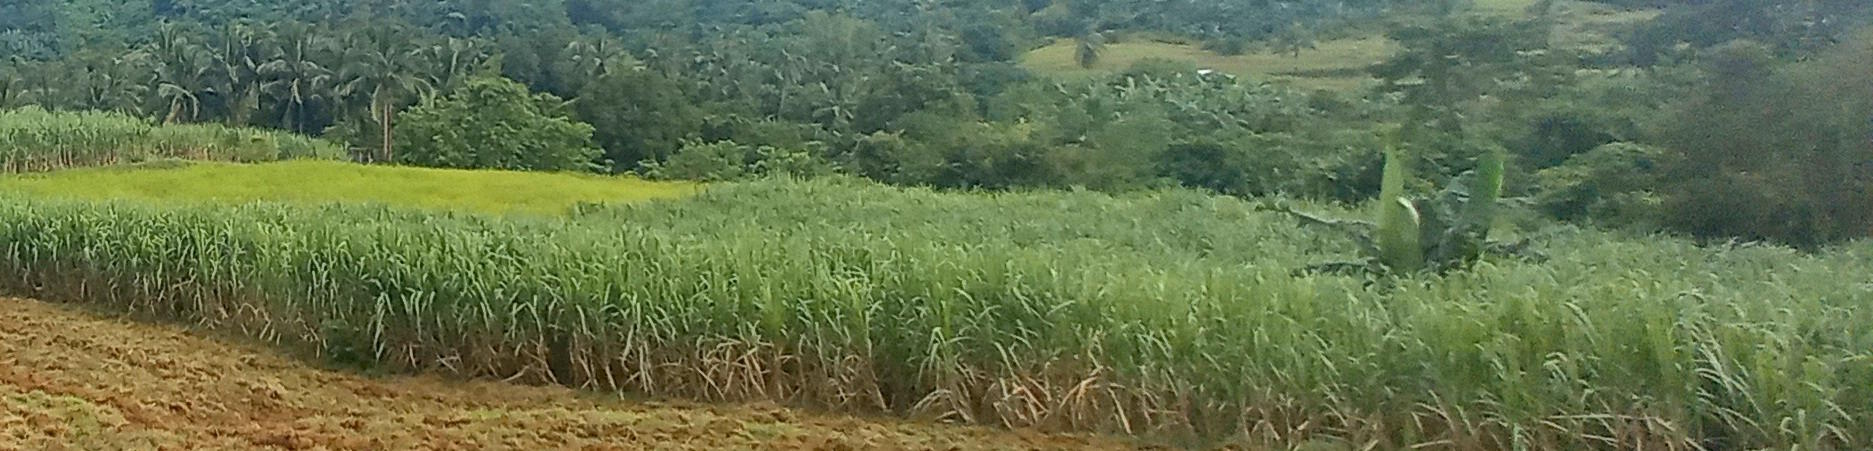 Sugar Cane Field 